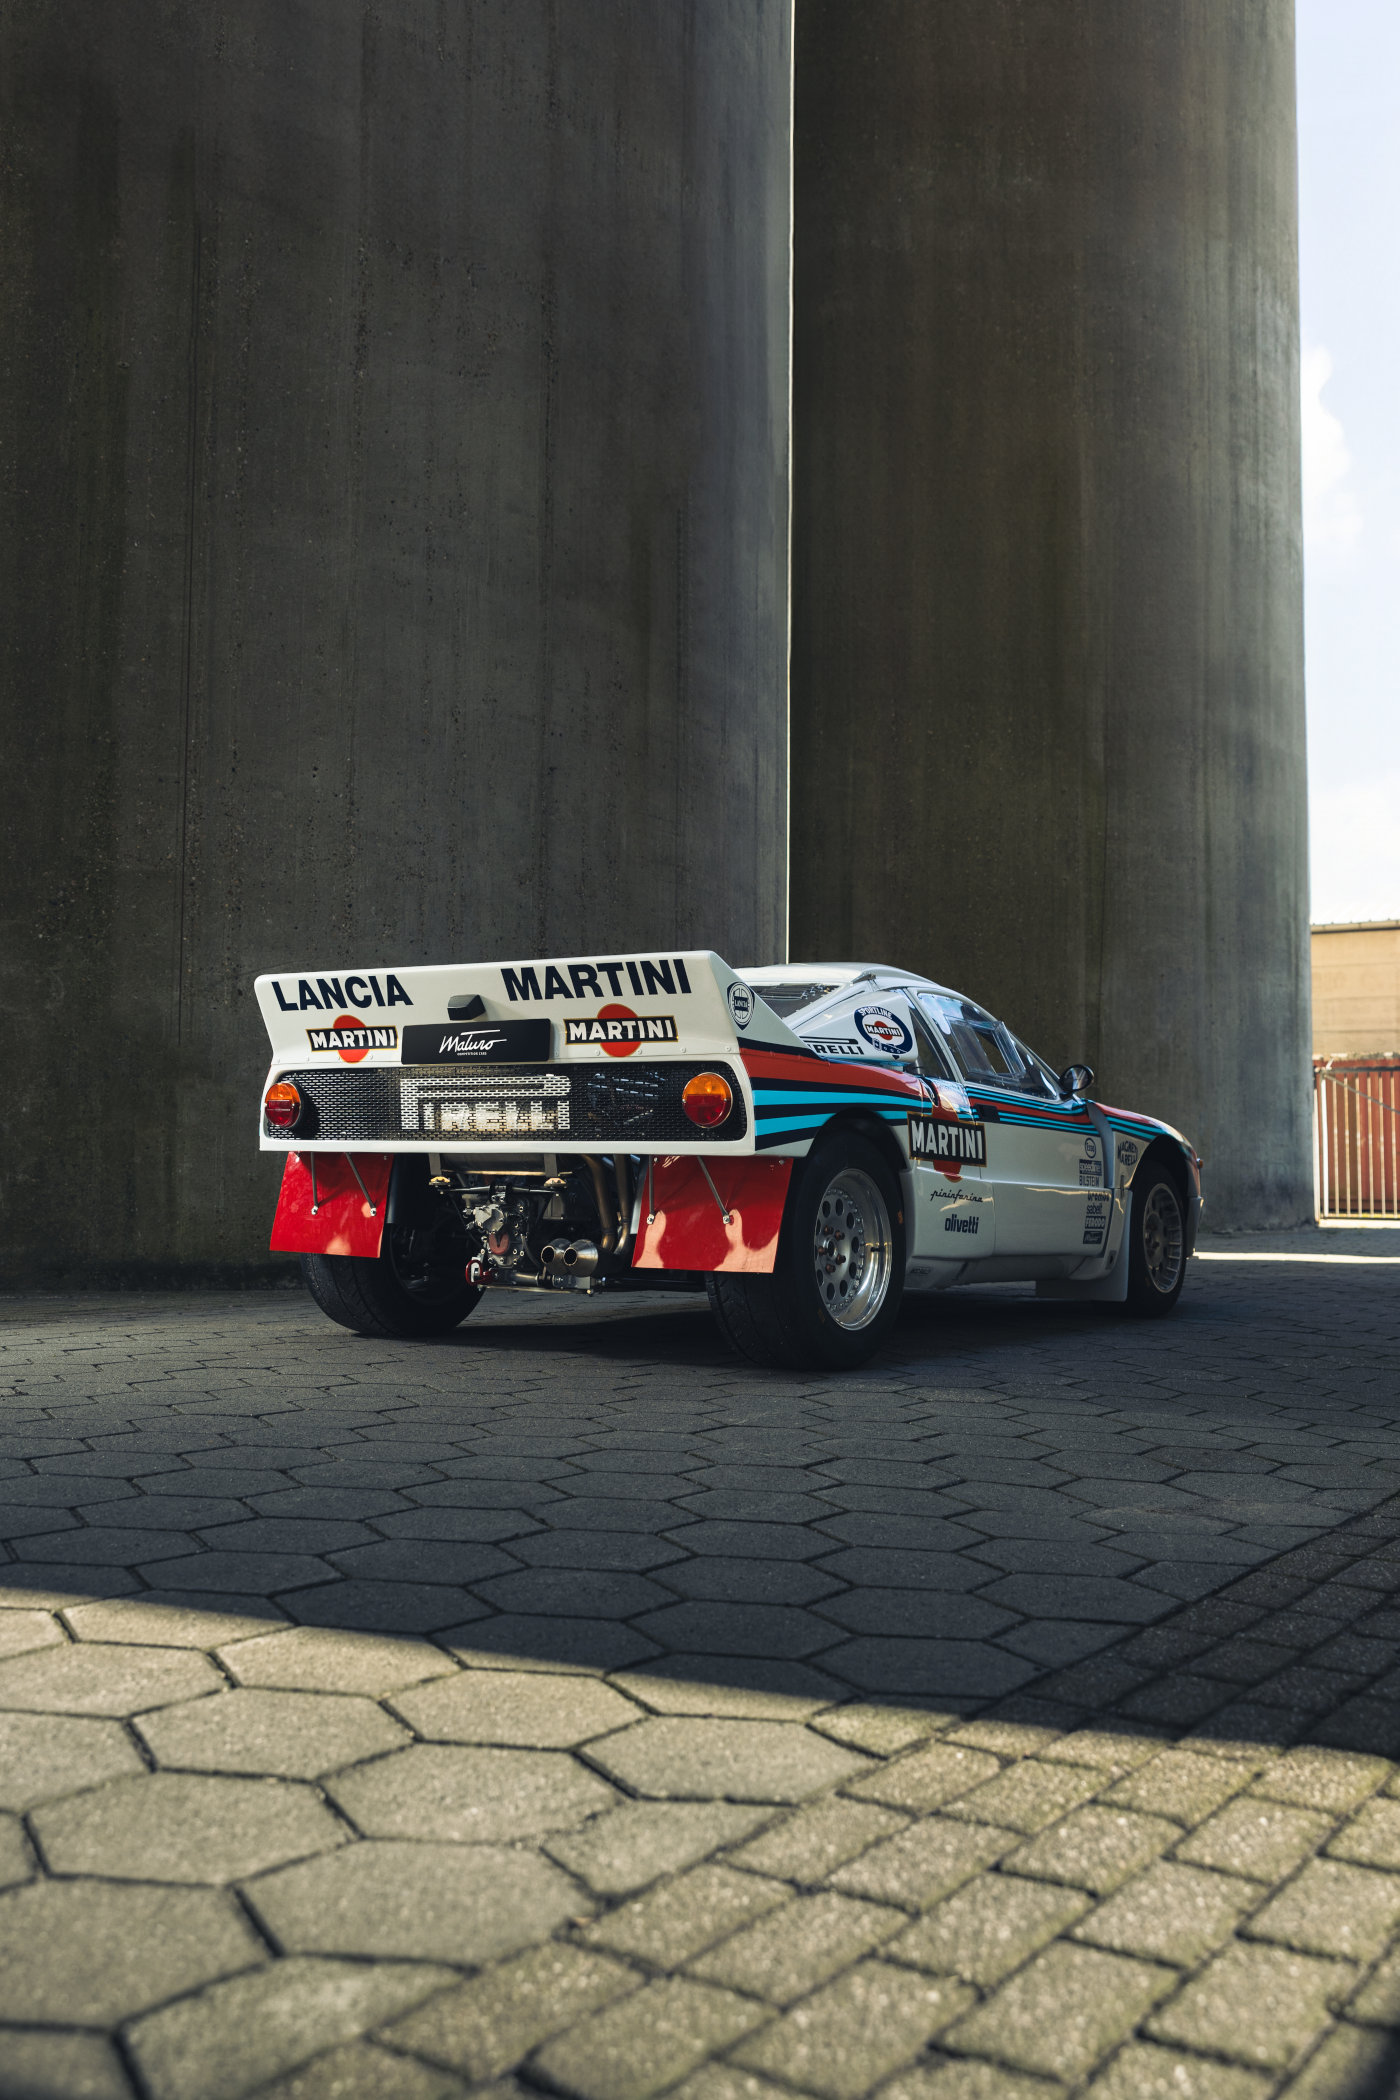 Maturo Competition Cars - Lancia Rally 037 Martini - 4